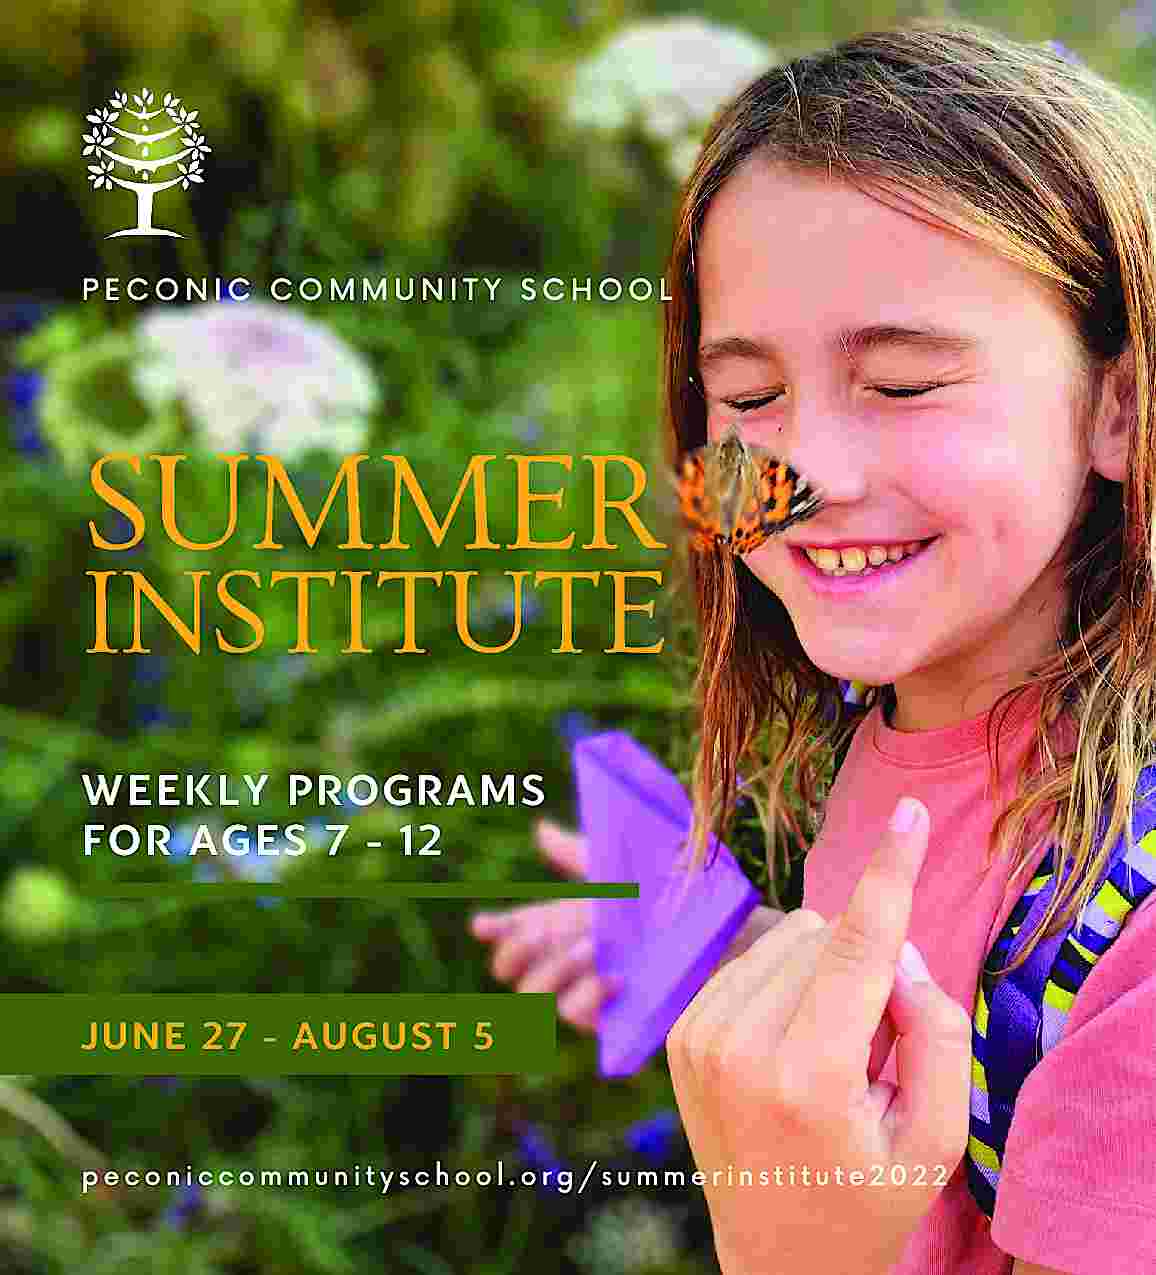 PECONIC COMMUNITY SCHOOL <br> <br>SUMMER  PECONIC COMMUNITY SCHOOL    SUMMER    INSTITUTE  WEEKLY PROGRAMS  FOR AGES 7 - 12    JUNE 27 - AUGUST 5  peconiccommunityschool.org/summerinstitute2022     